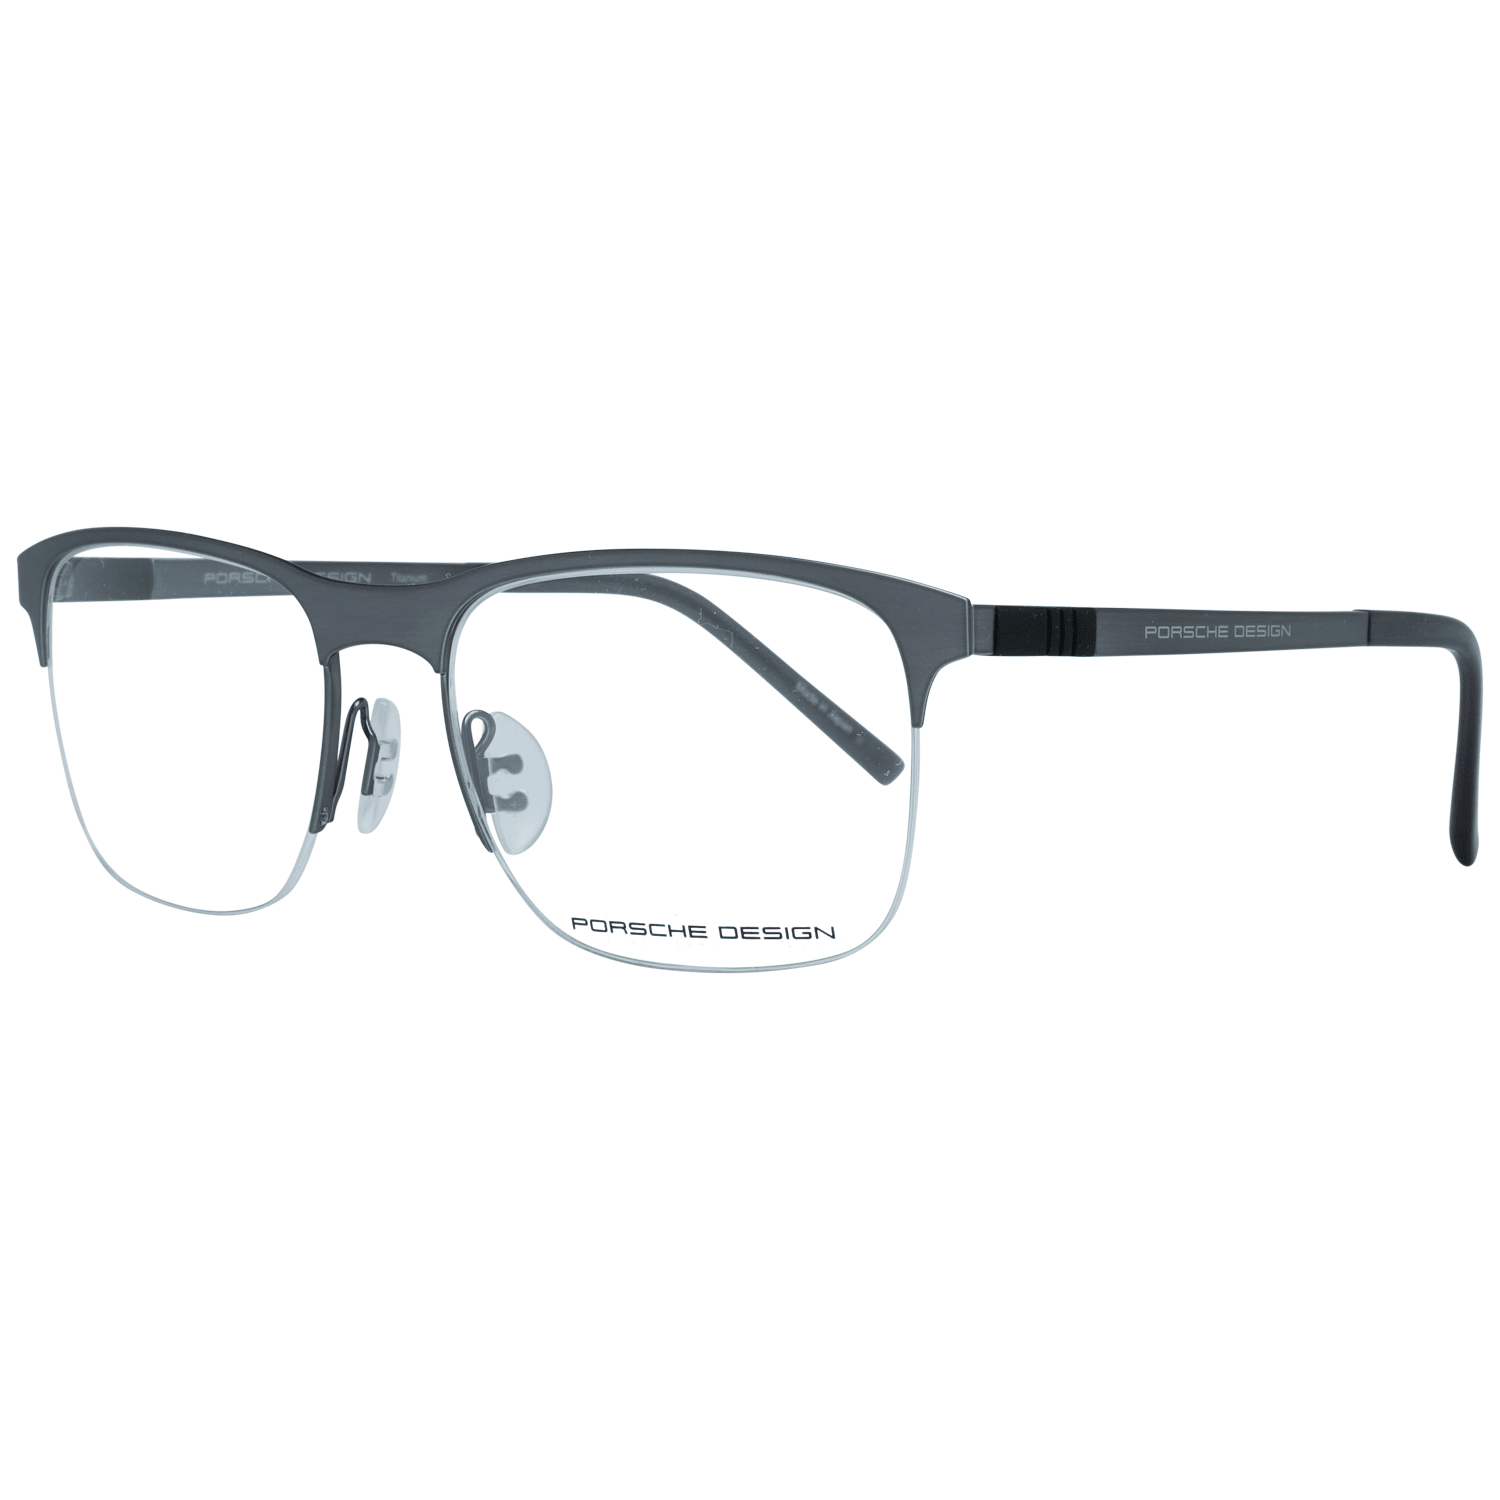 Porsche Design Men's Optical Frames Eyewear Grey P8322 54C